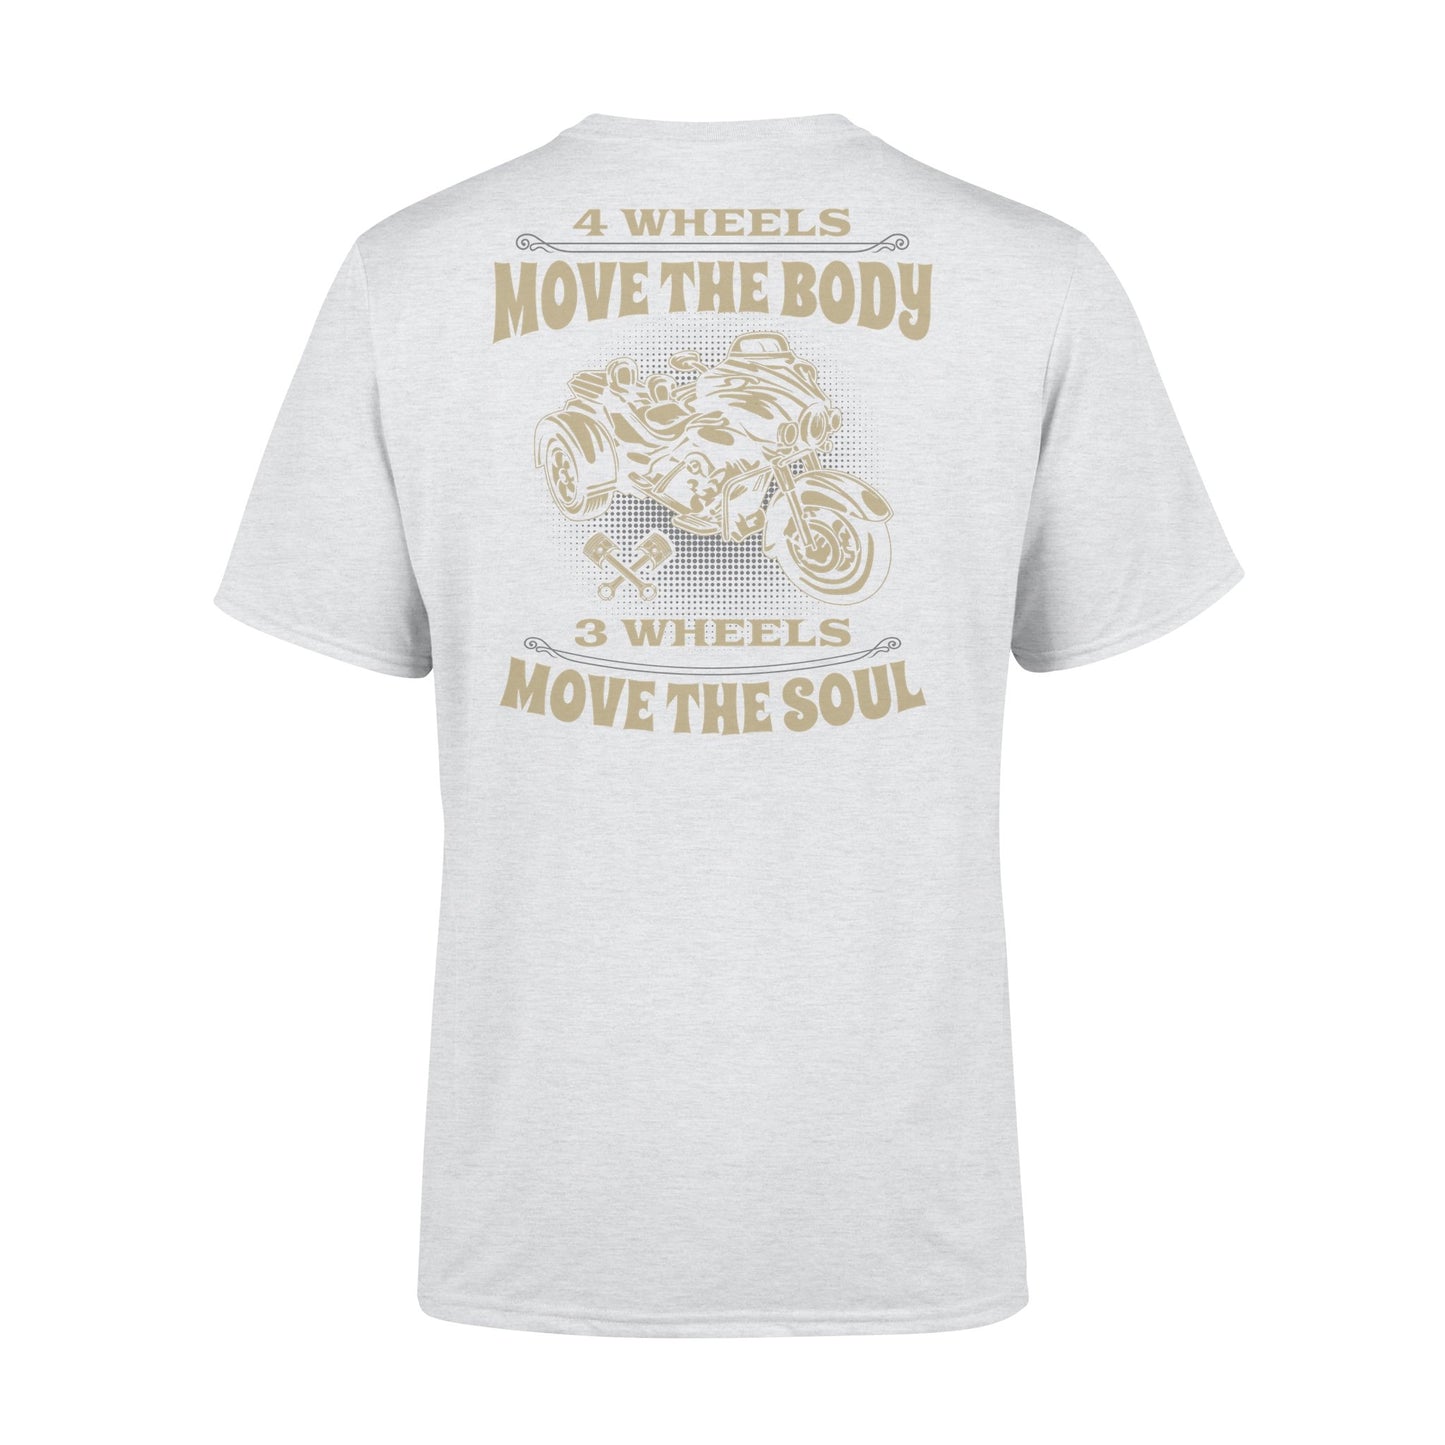 3 Wheels Move The Soul T-shirt